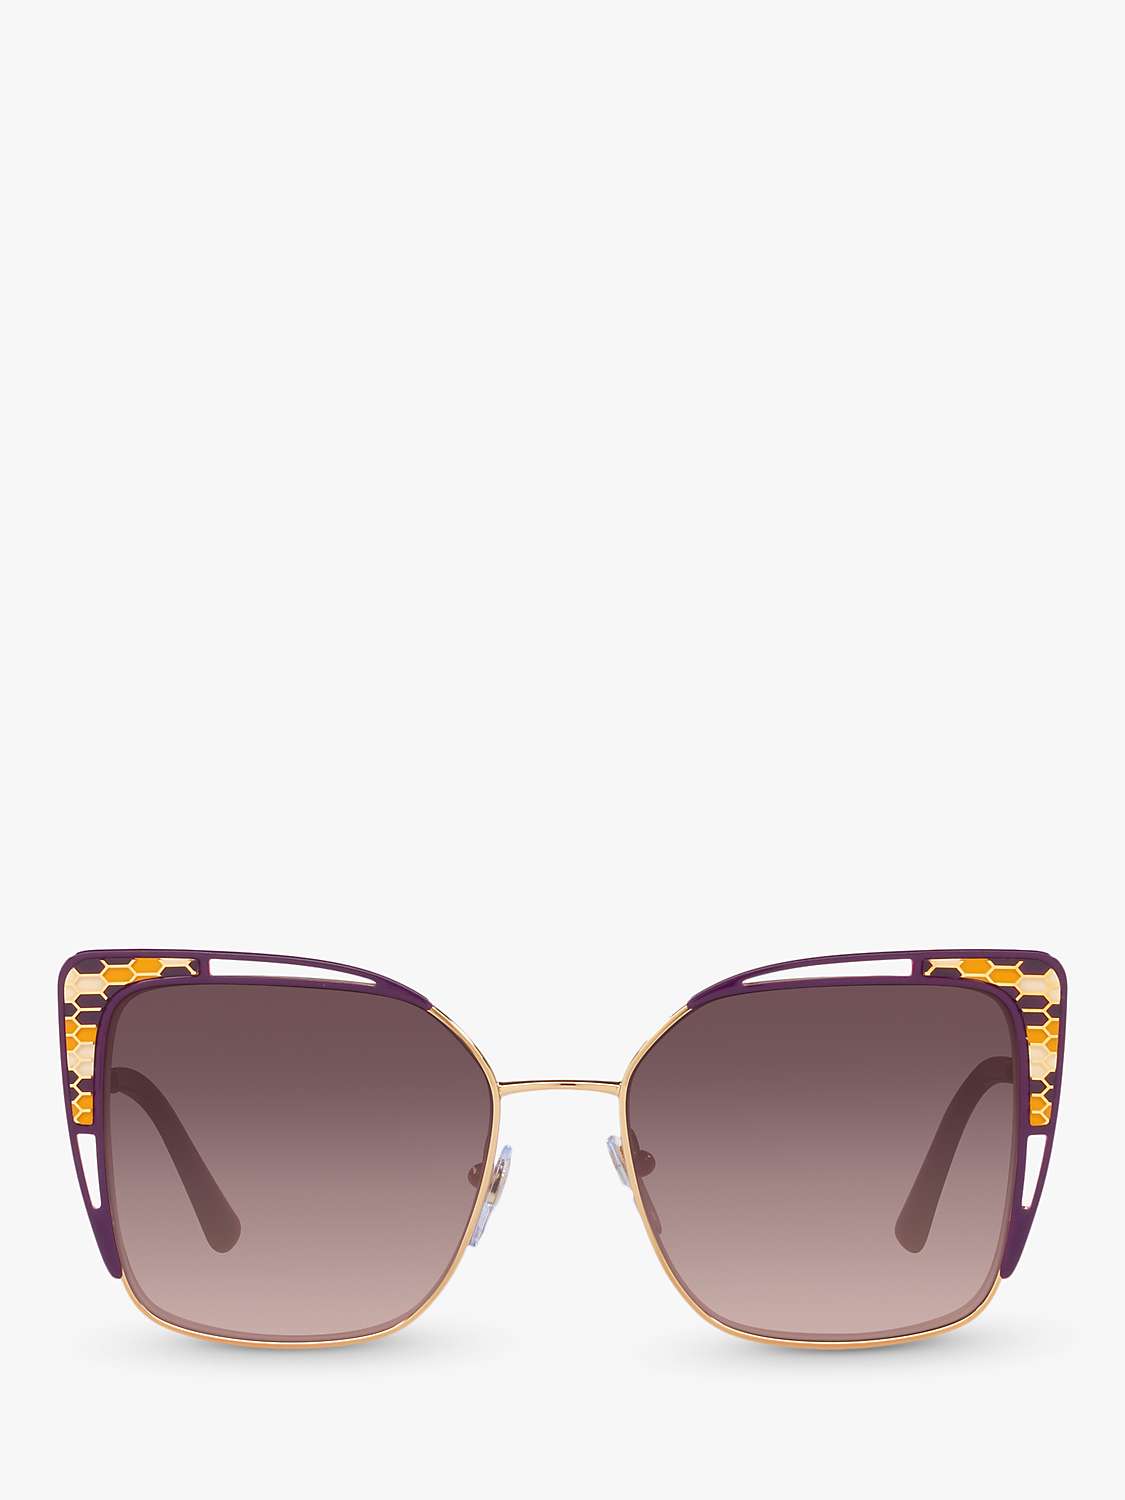 Buy BVLGARI BV6179 Women's Butterfly Sunglasses, Gold/Purple Gradient Online at johnlewis.com